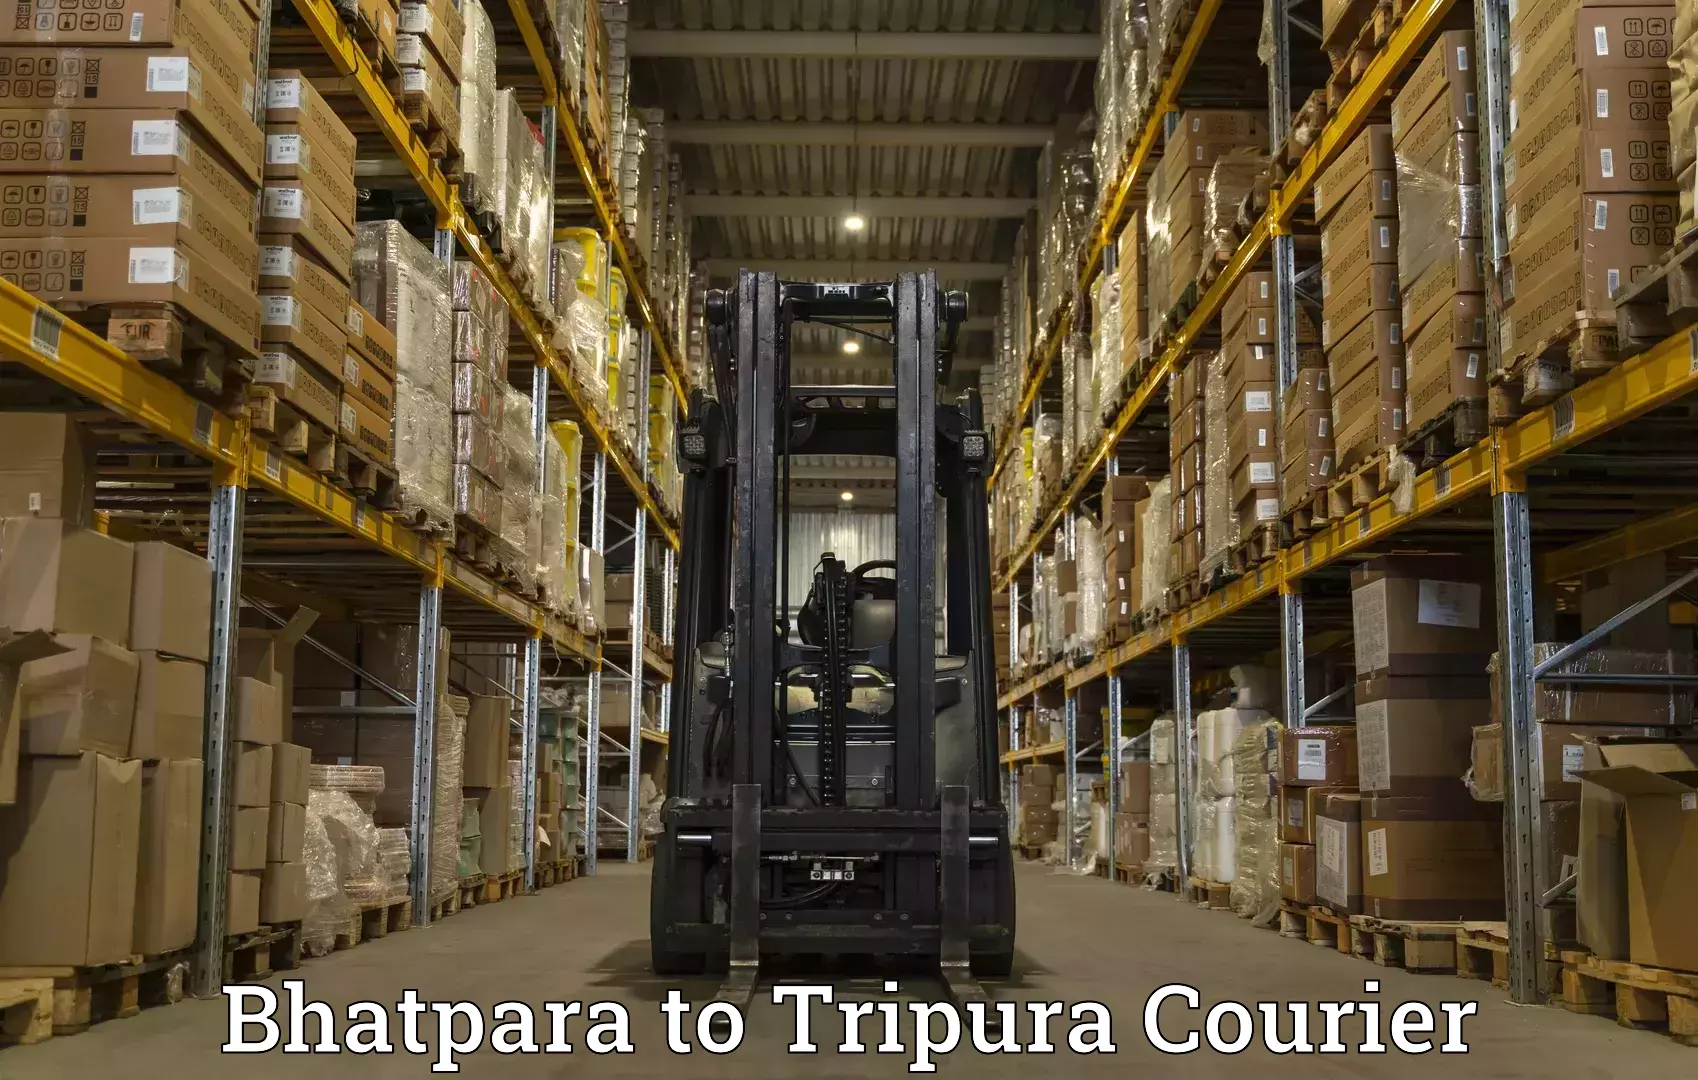 Express shipping Bhatpara to Udaipur Tripura